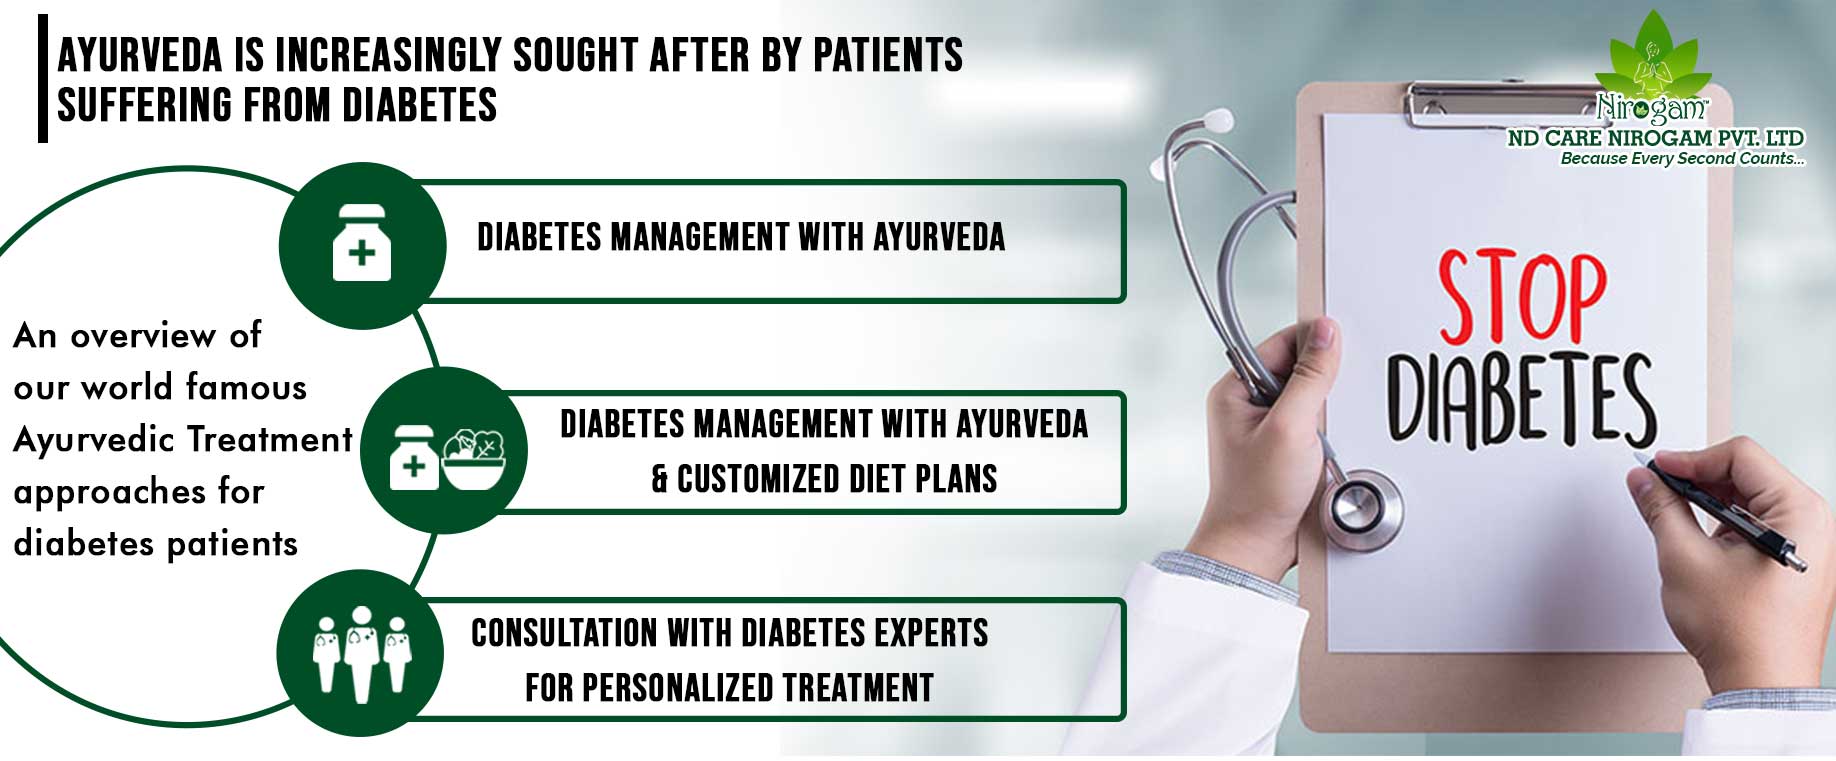 Ayurvedic Diabetes Treatment